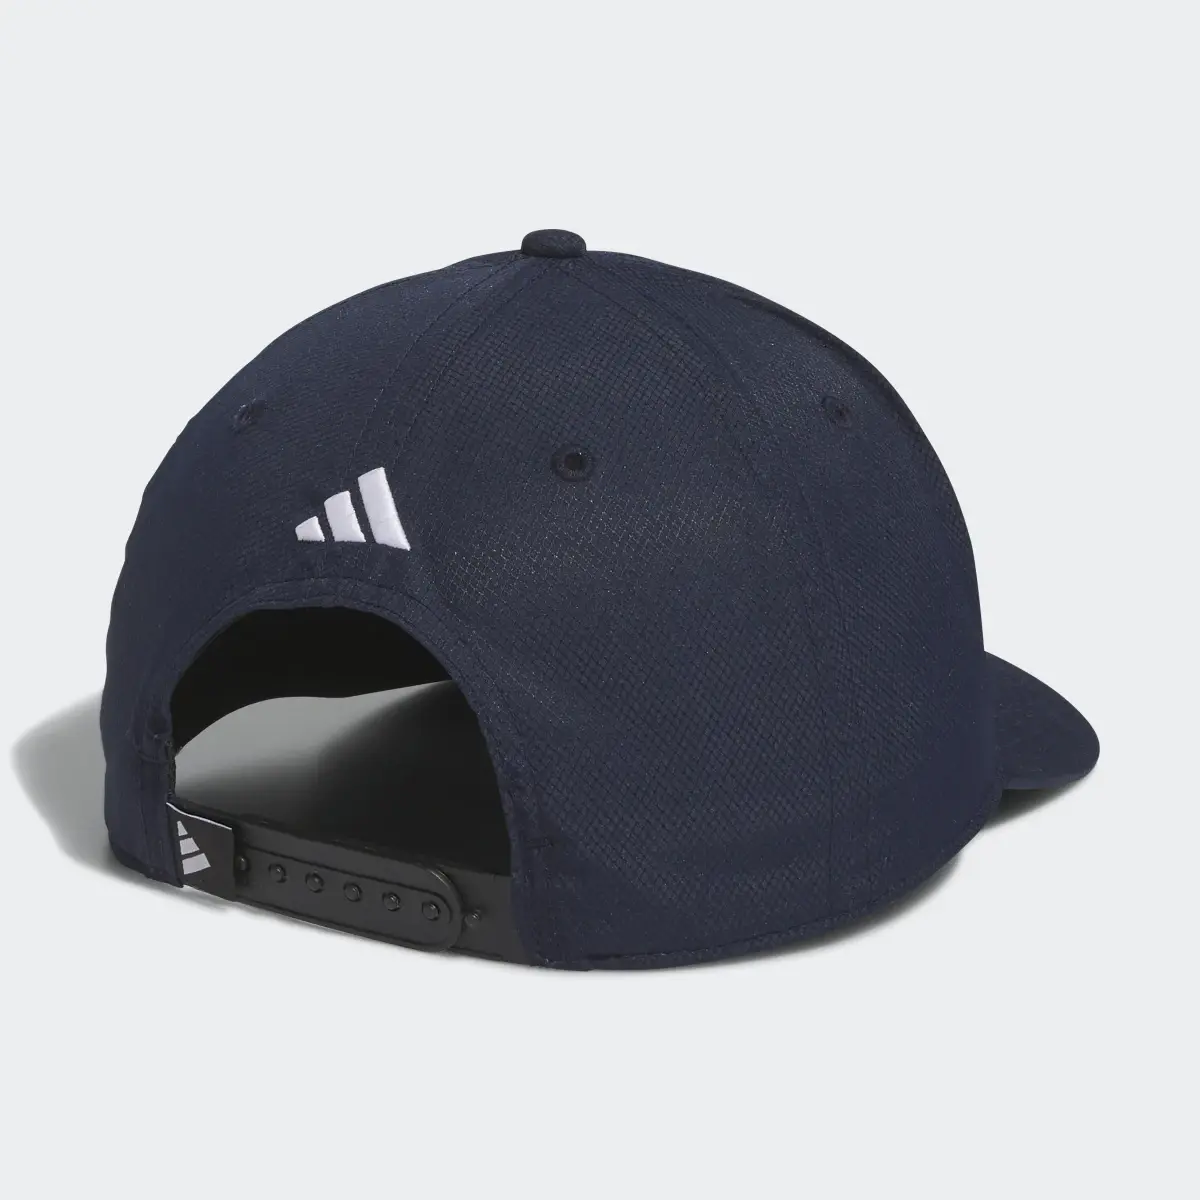 Adidas 3-Stripes Tour Hat. 3